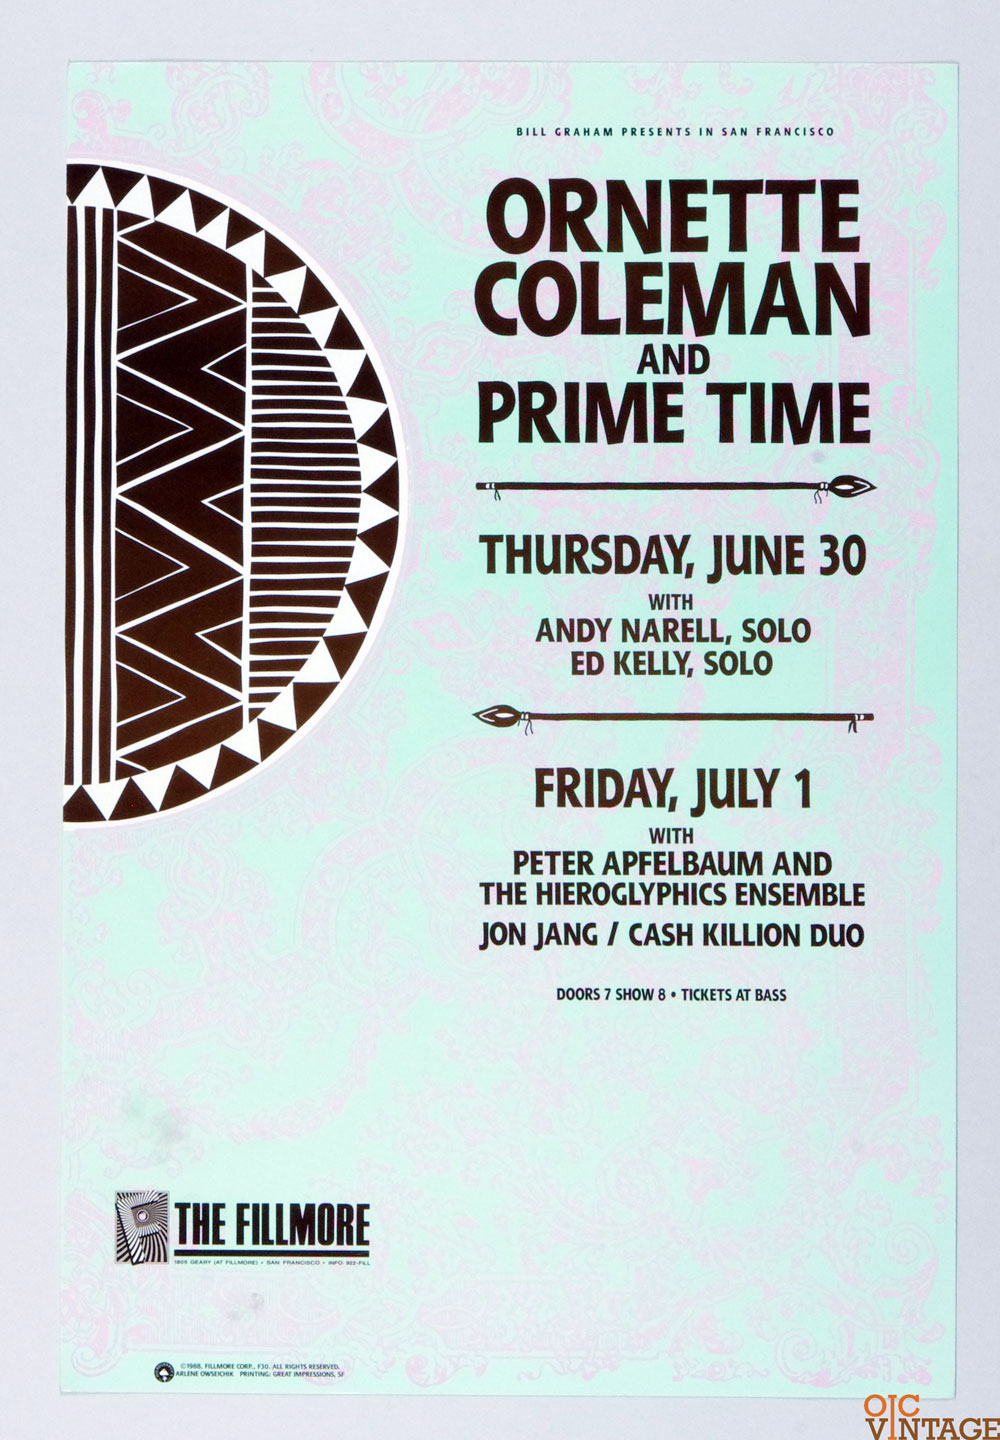 Ornette Coleman and Prime Time Poster 1988 Jun 30 New Fillmore San Francisco